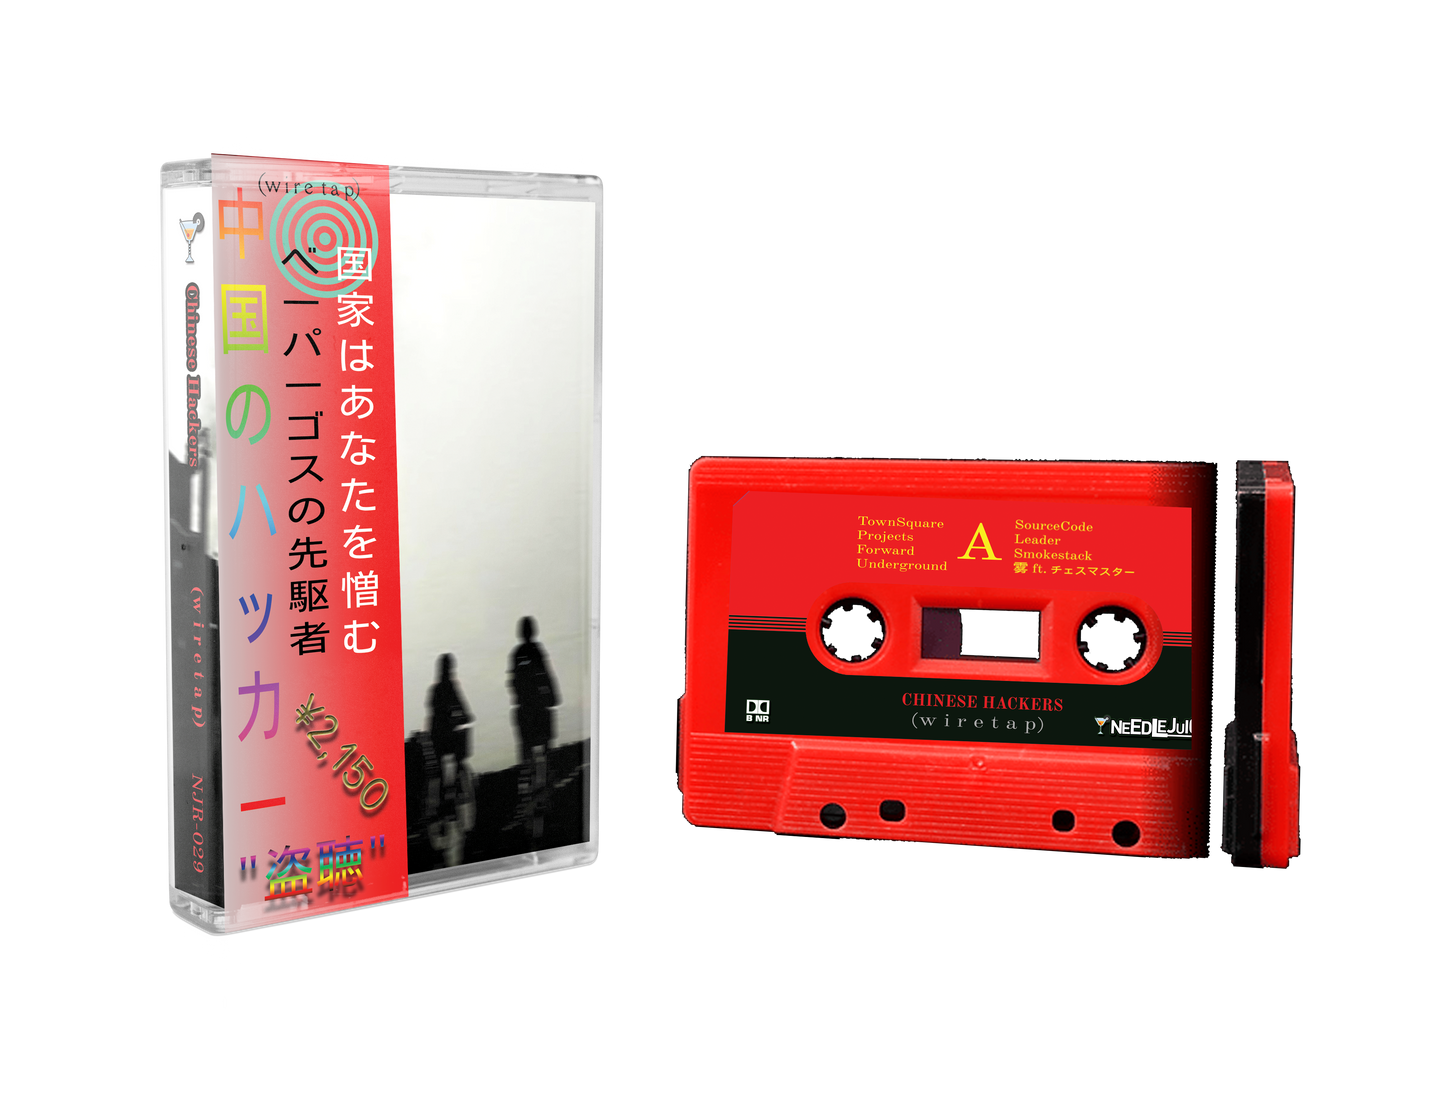 Wiretap - Cassette